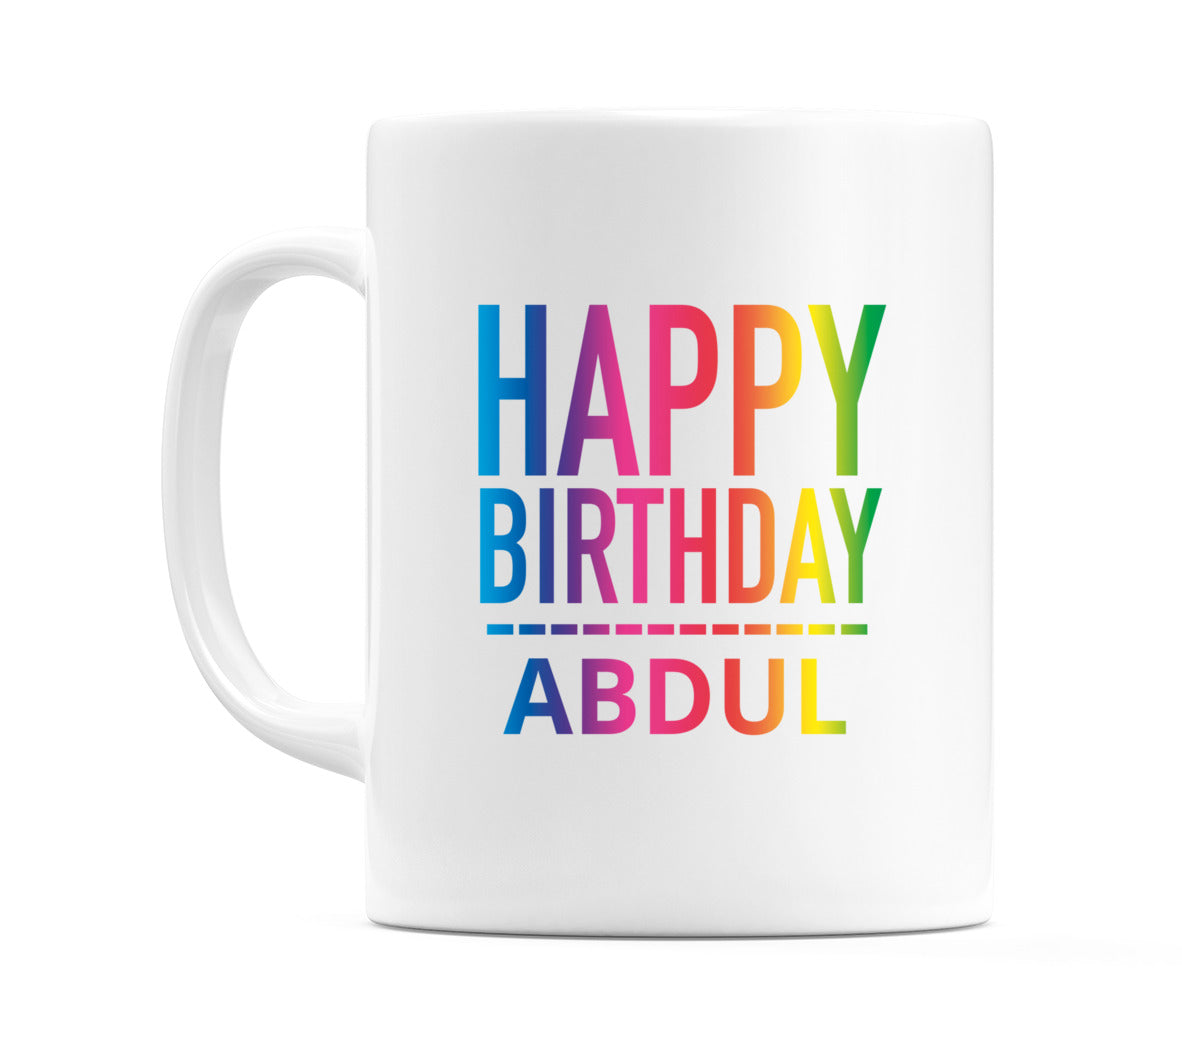 Happy Birthday Abdul (Rainbow) Mug Cup by WeDoMugs